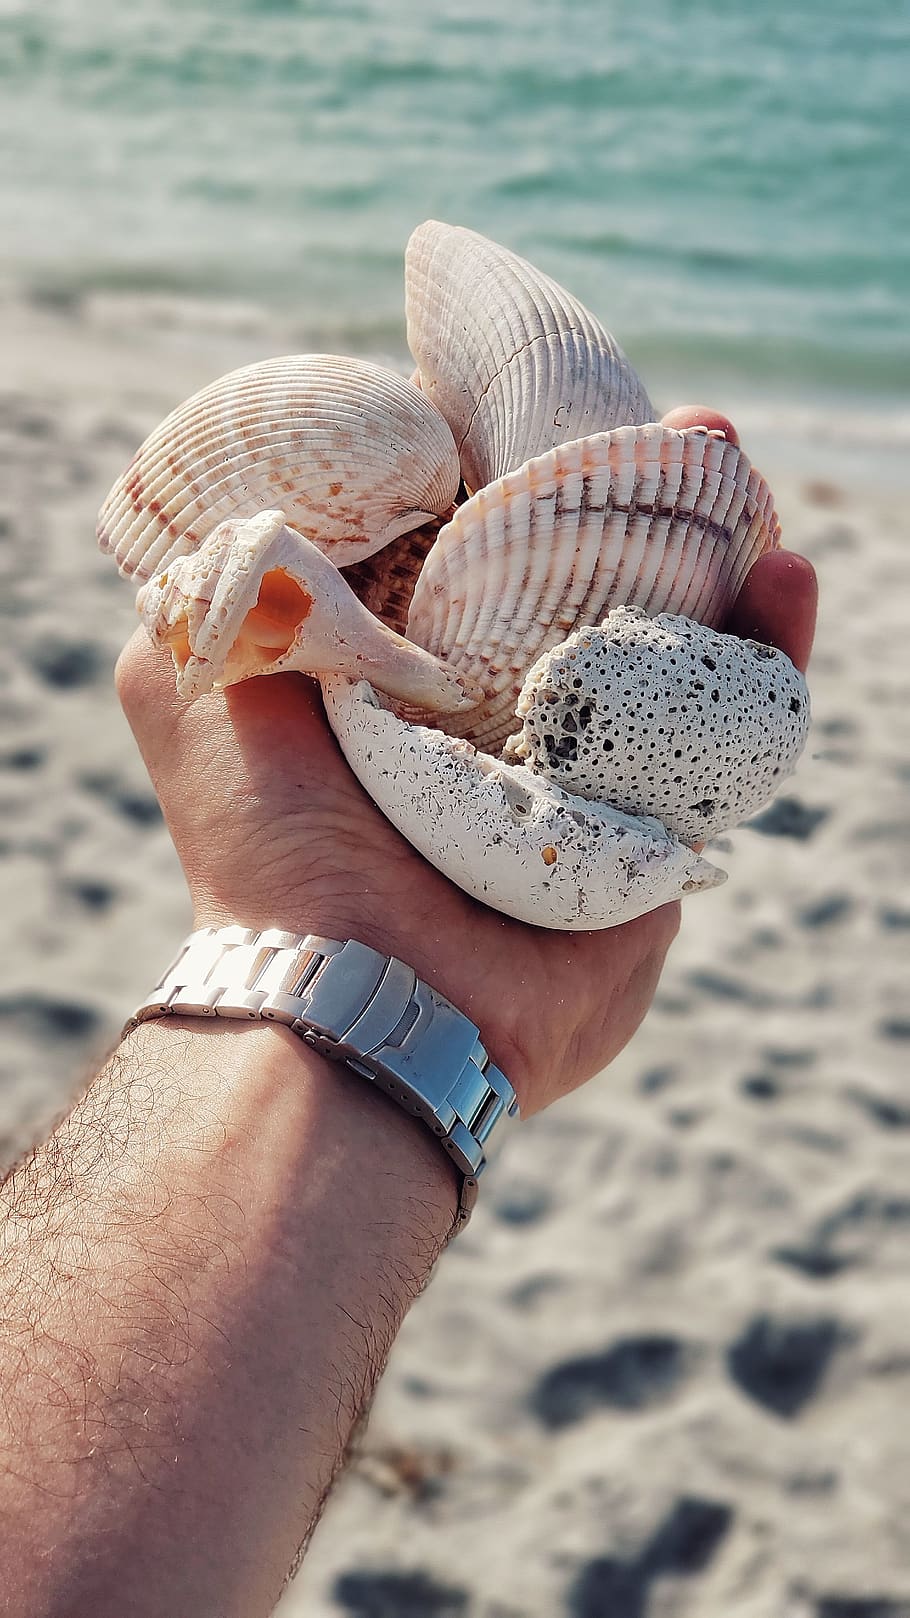 HD wallpaper: seashells, human hand, beach, human body part